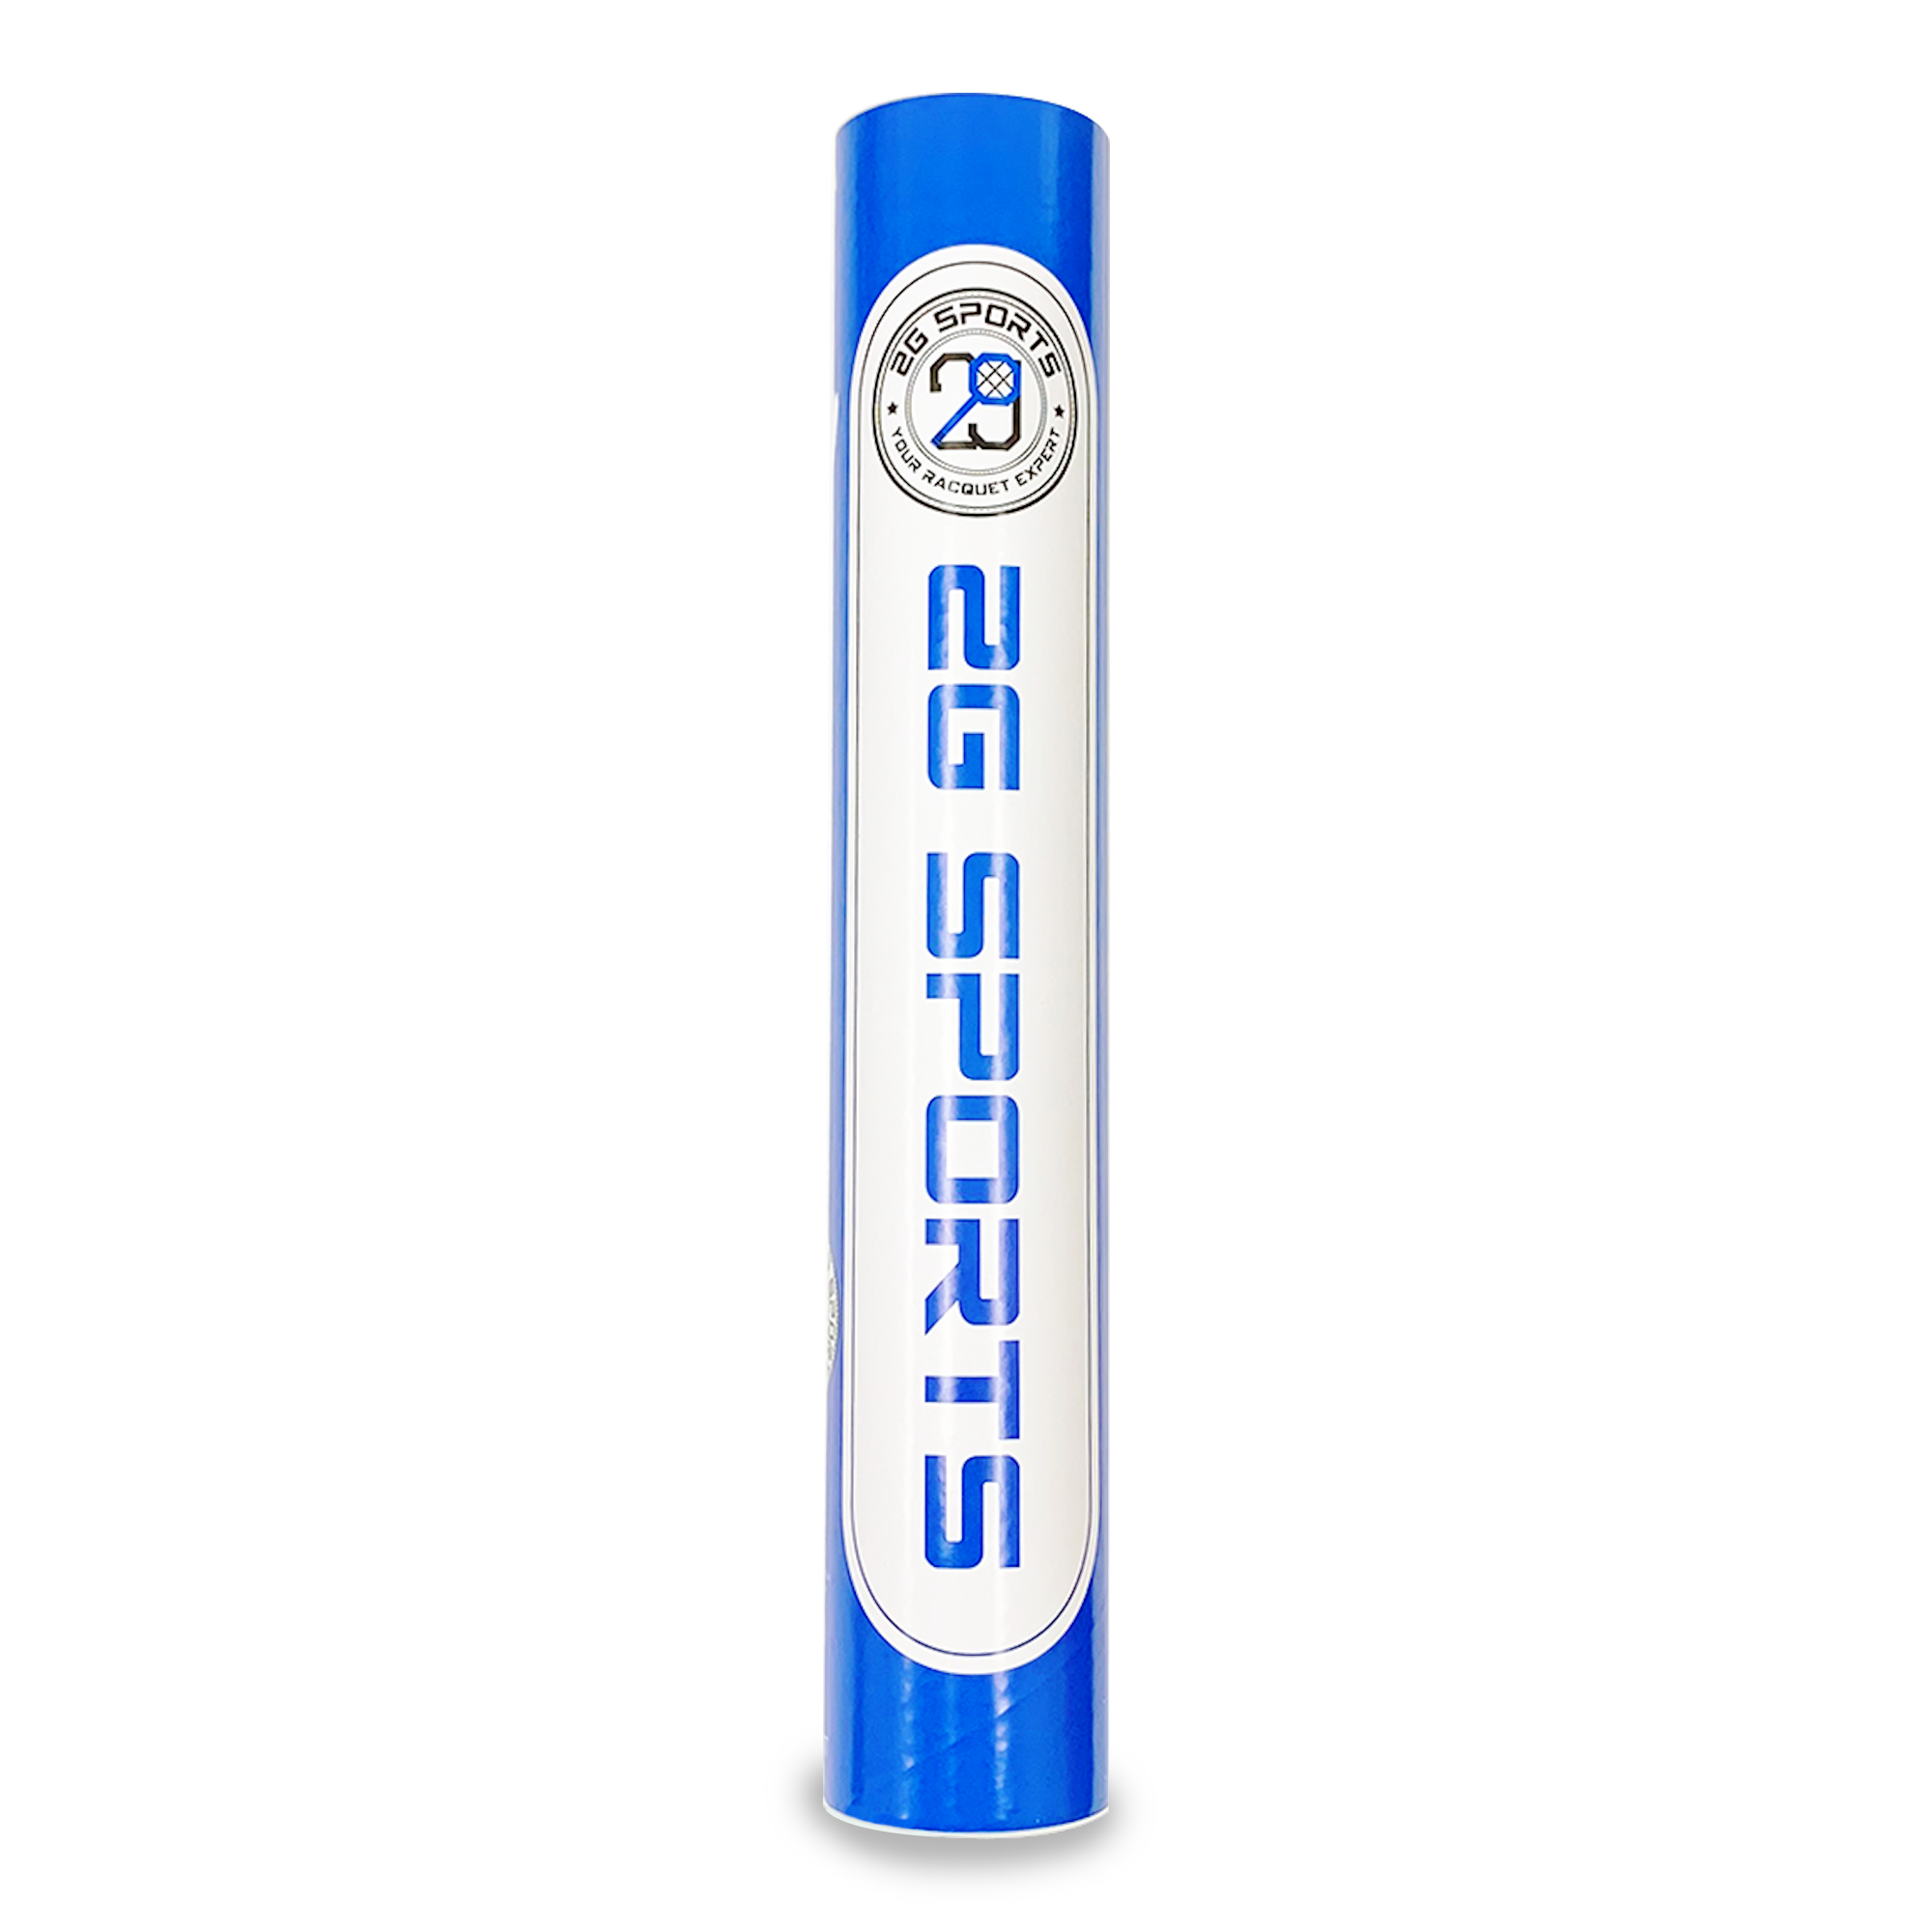 2G SPORTS BLUE label Badminton Feather Shuttlecocks One Tube